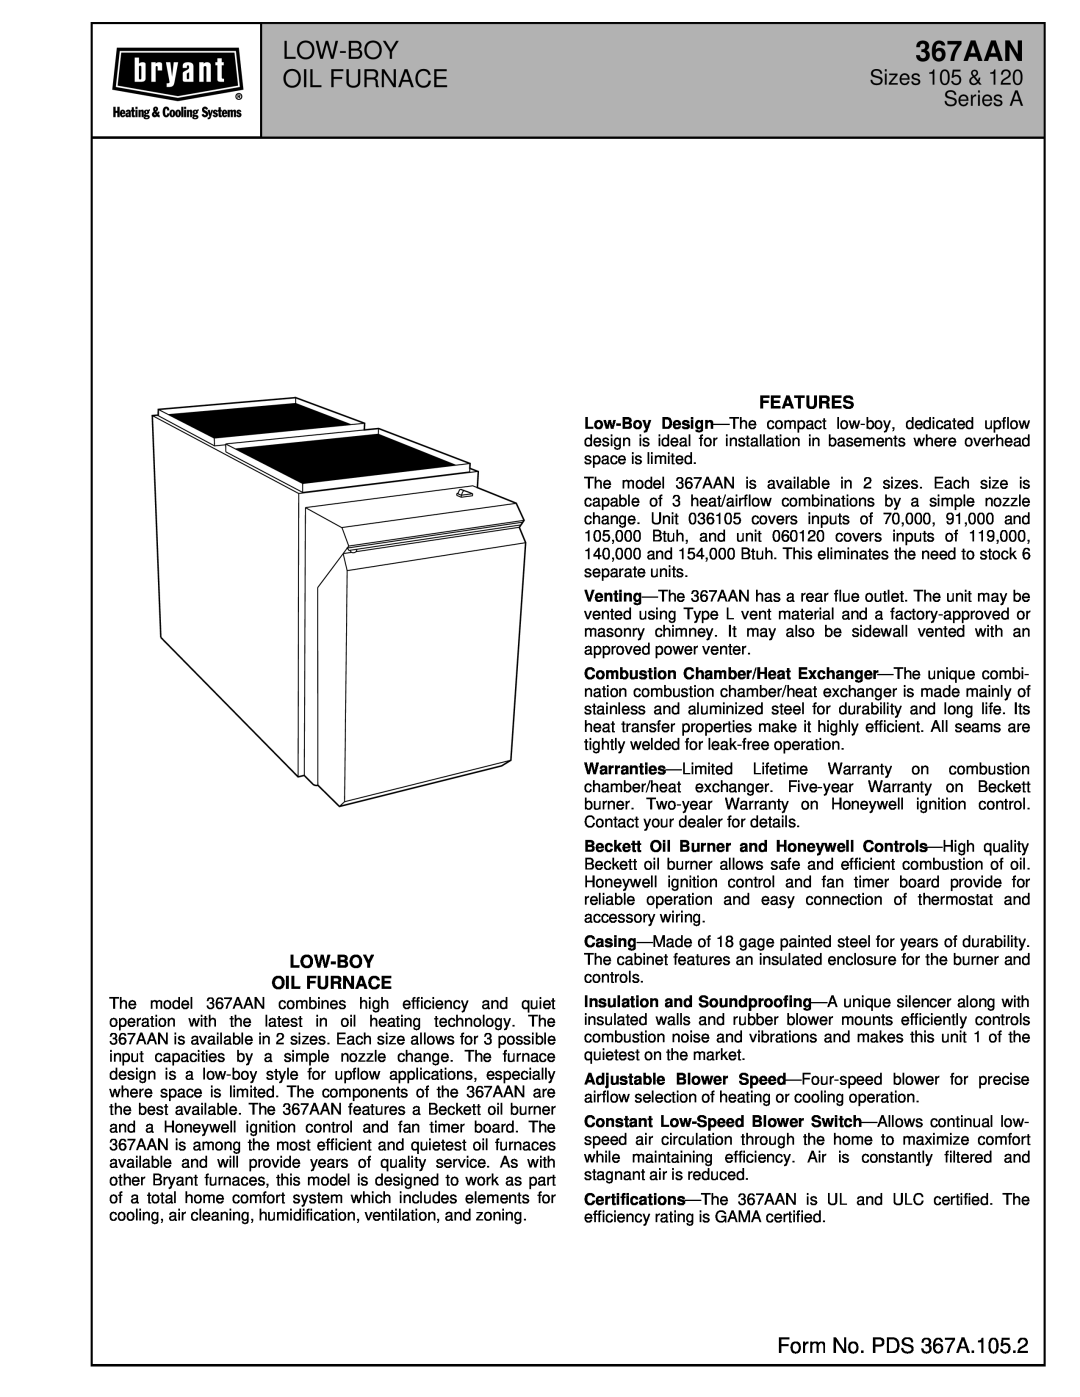 Bryant manual MODEL 367AAN OIL FURNACE, User’S Information Manual, Note To Installer 